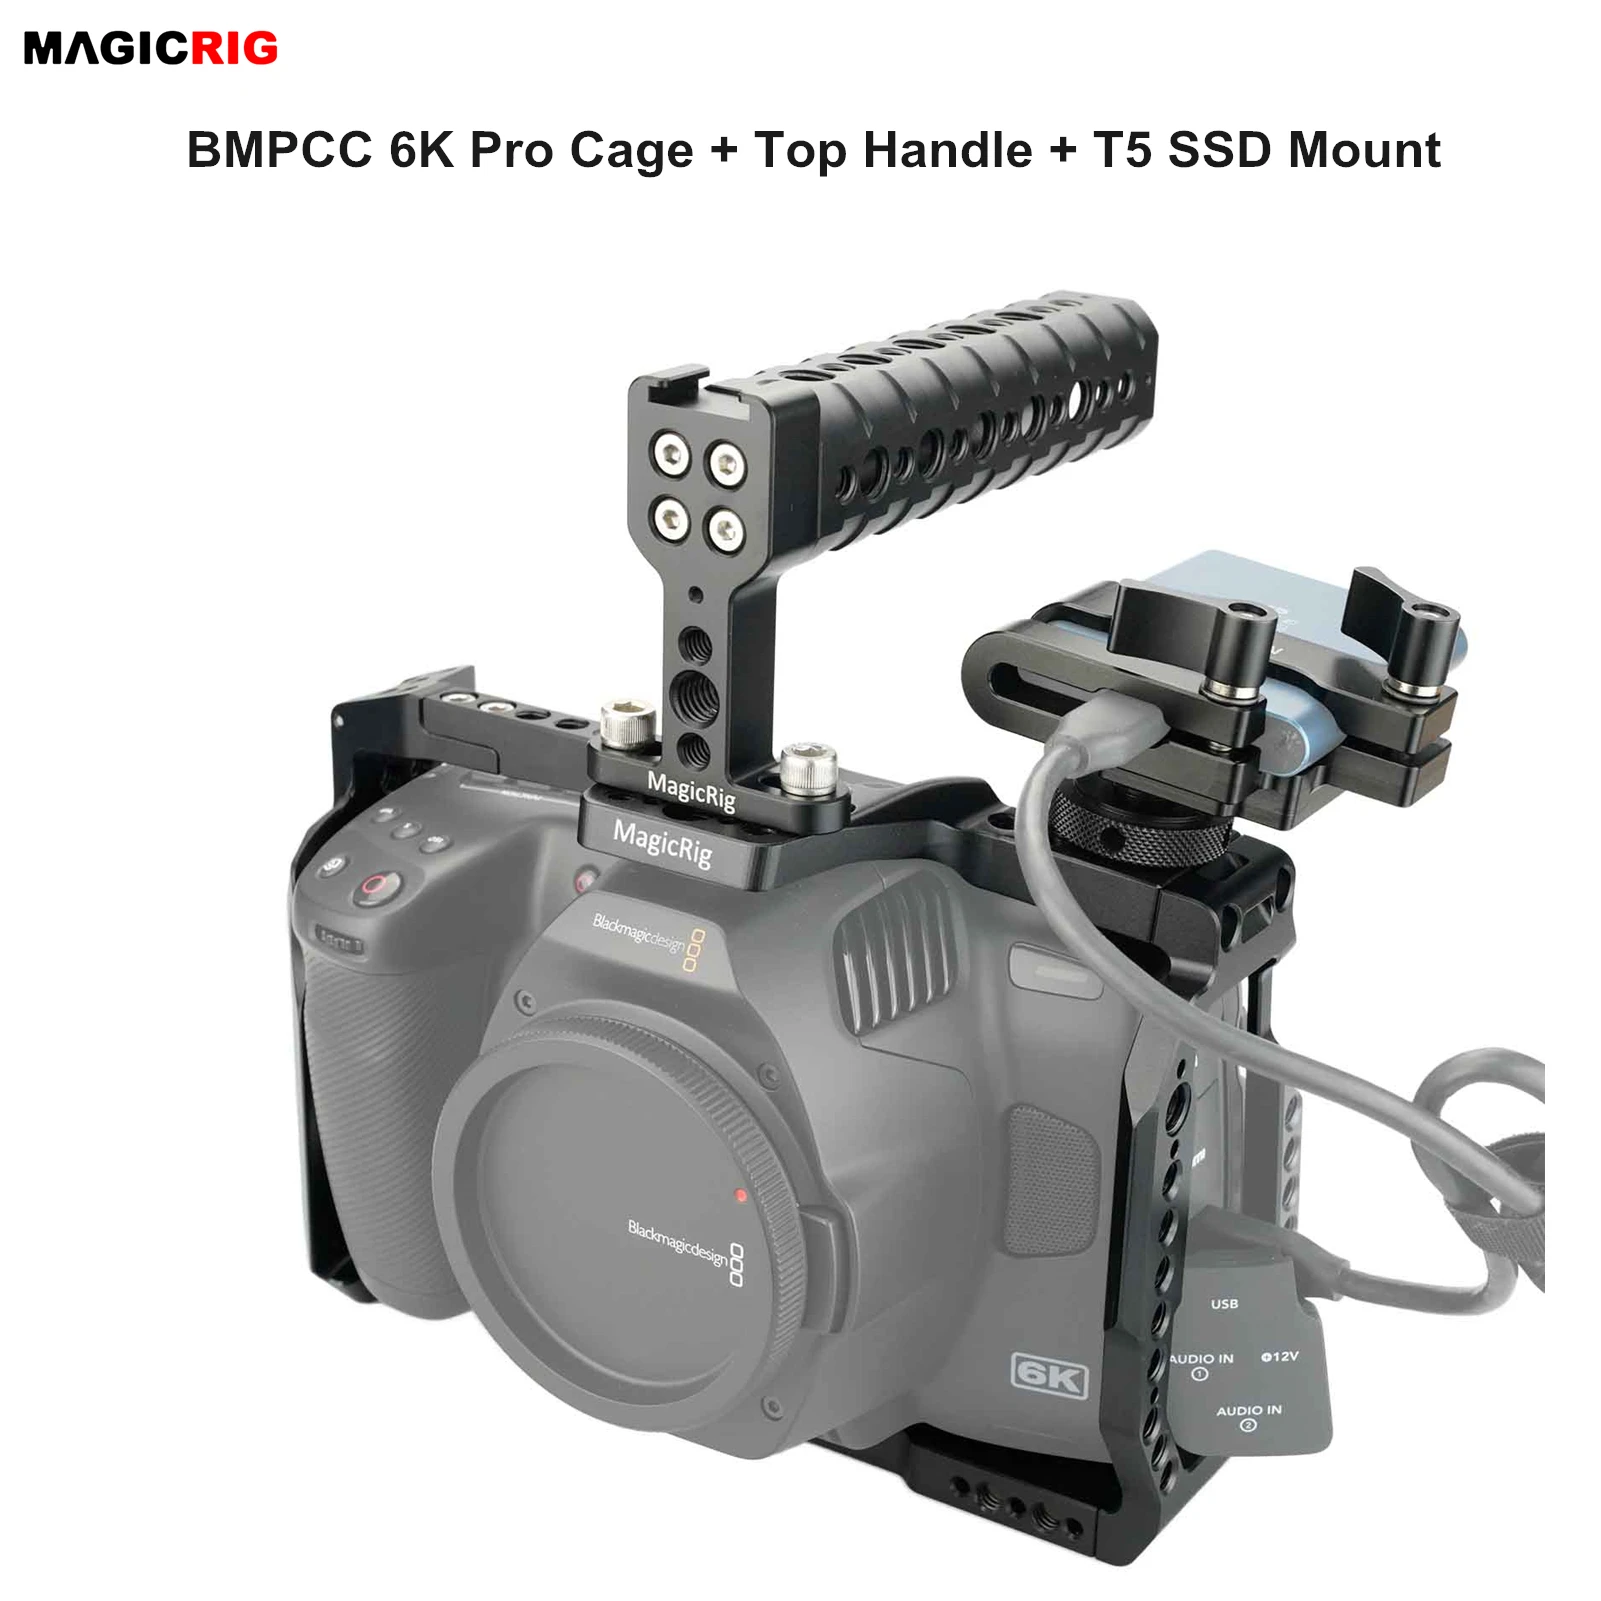 MAGICRIG BMPCC 6K Pro Cage with Top Handle Grip + T5 SSD Holder for Blackmagic Design Pocket Cinema Camera 6K Pro / 6K G2